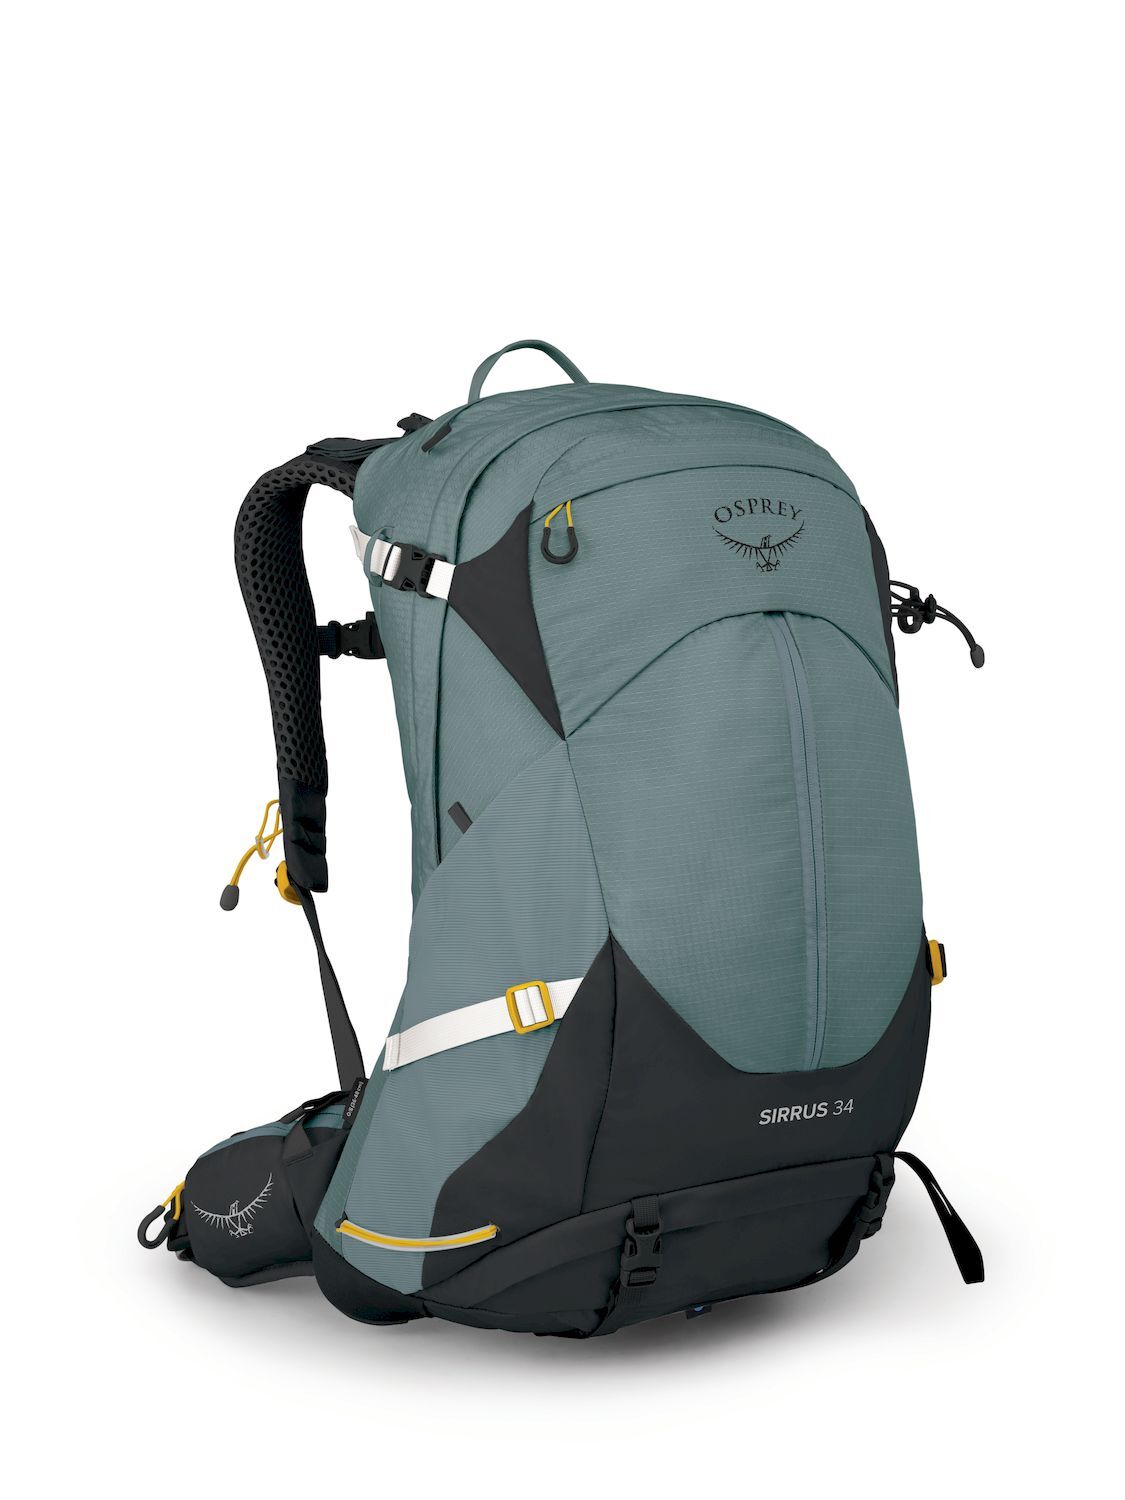 Osprey Sirrus 34 - Walking backpack - Women's